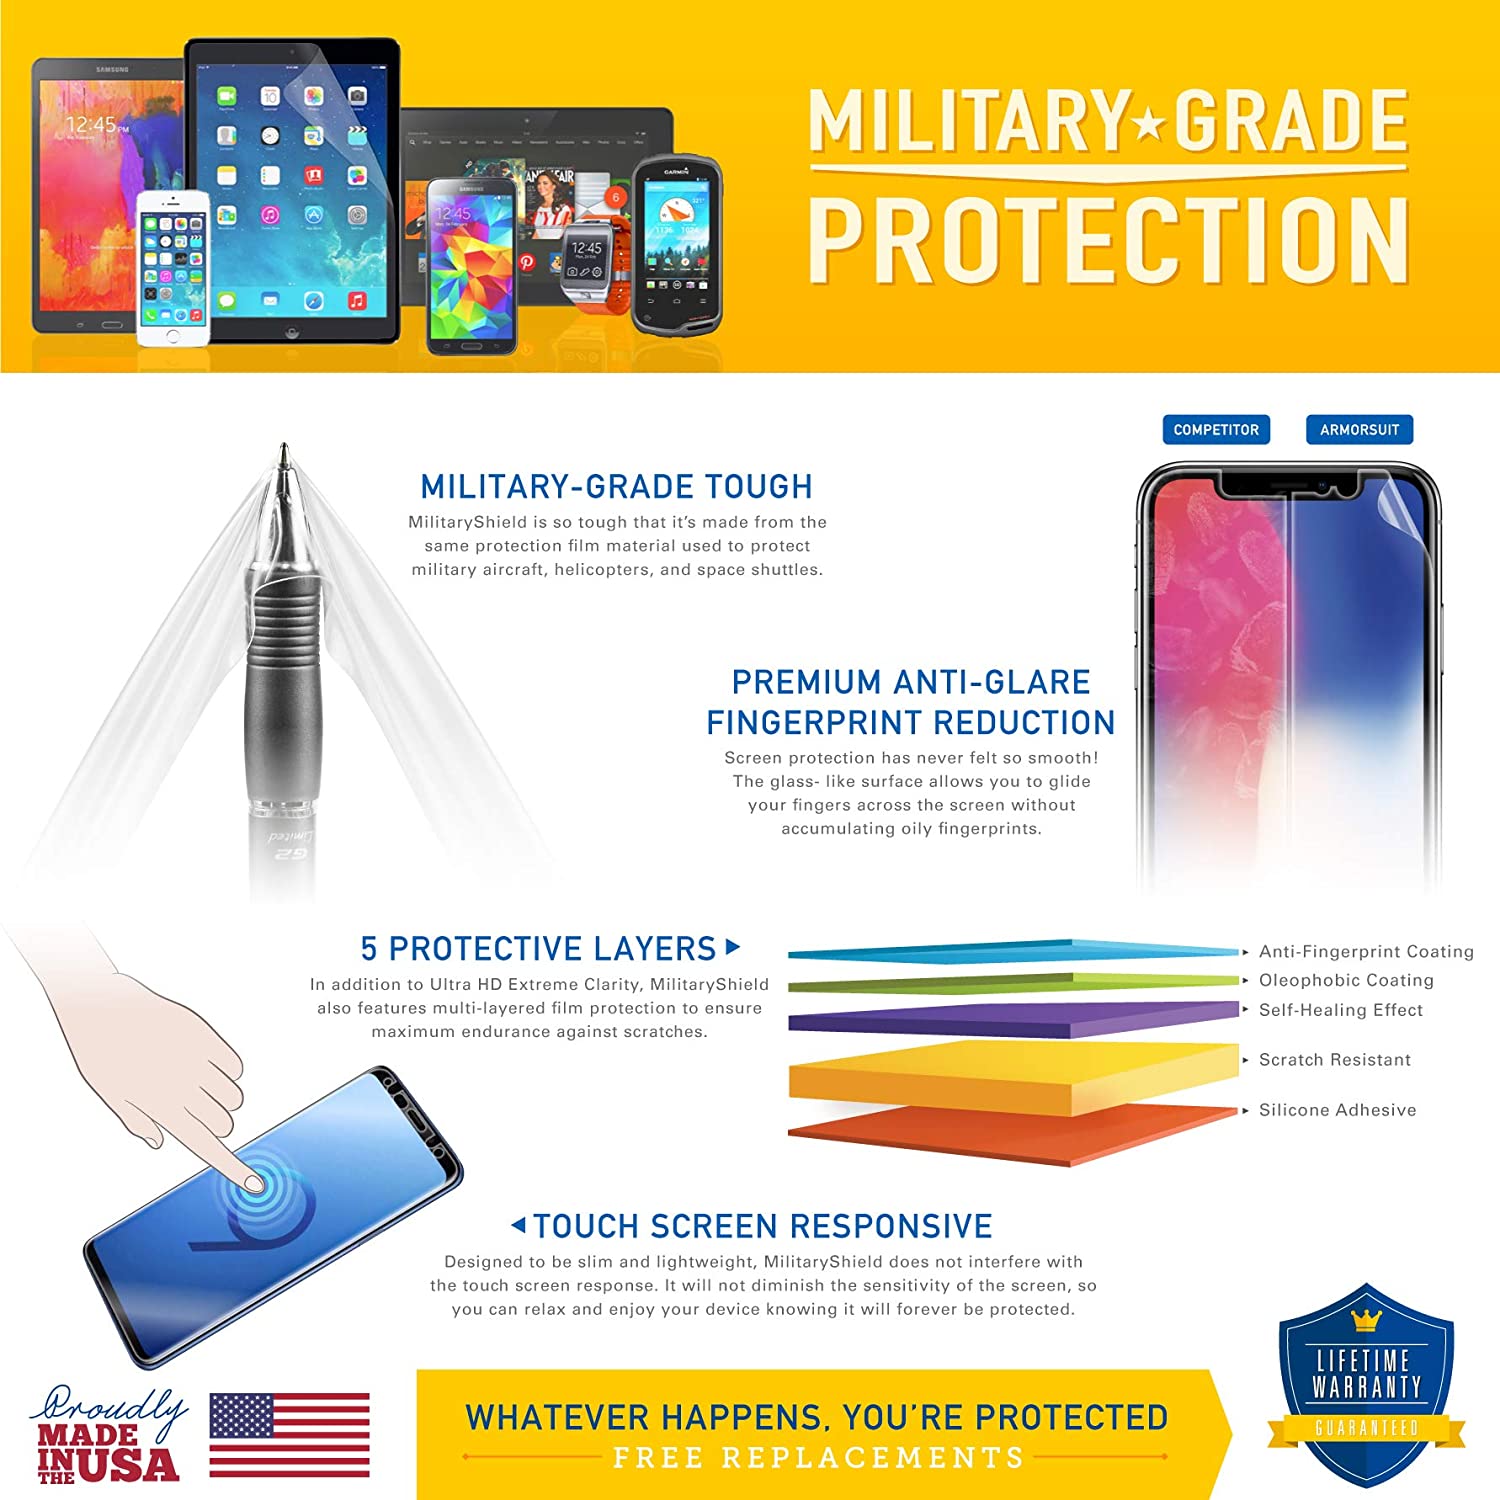 Samsung Galaxy Note 8.0 Screen Protector + Black Carbon Fiber Film Protector